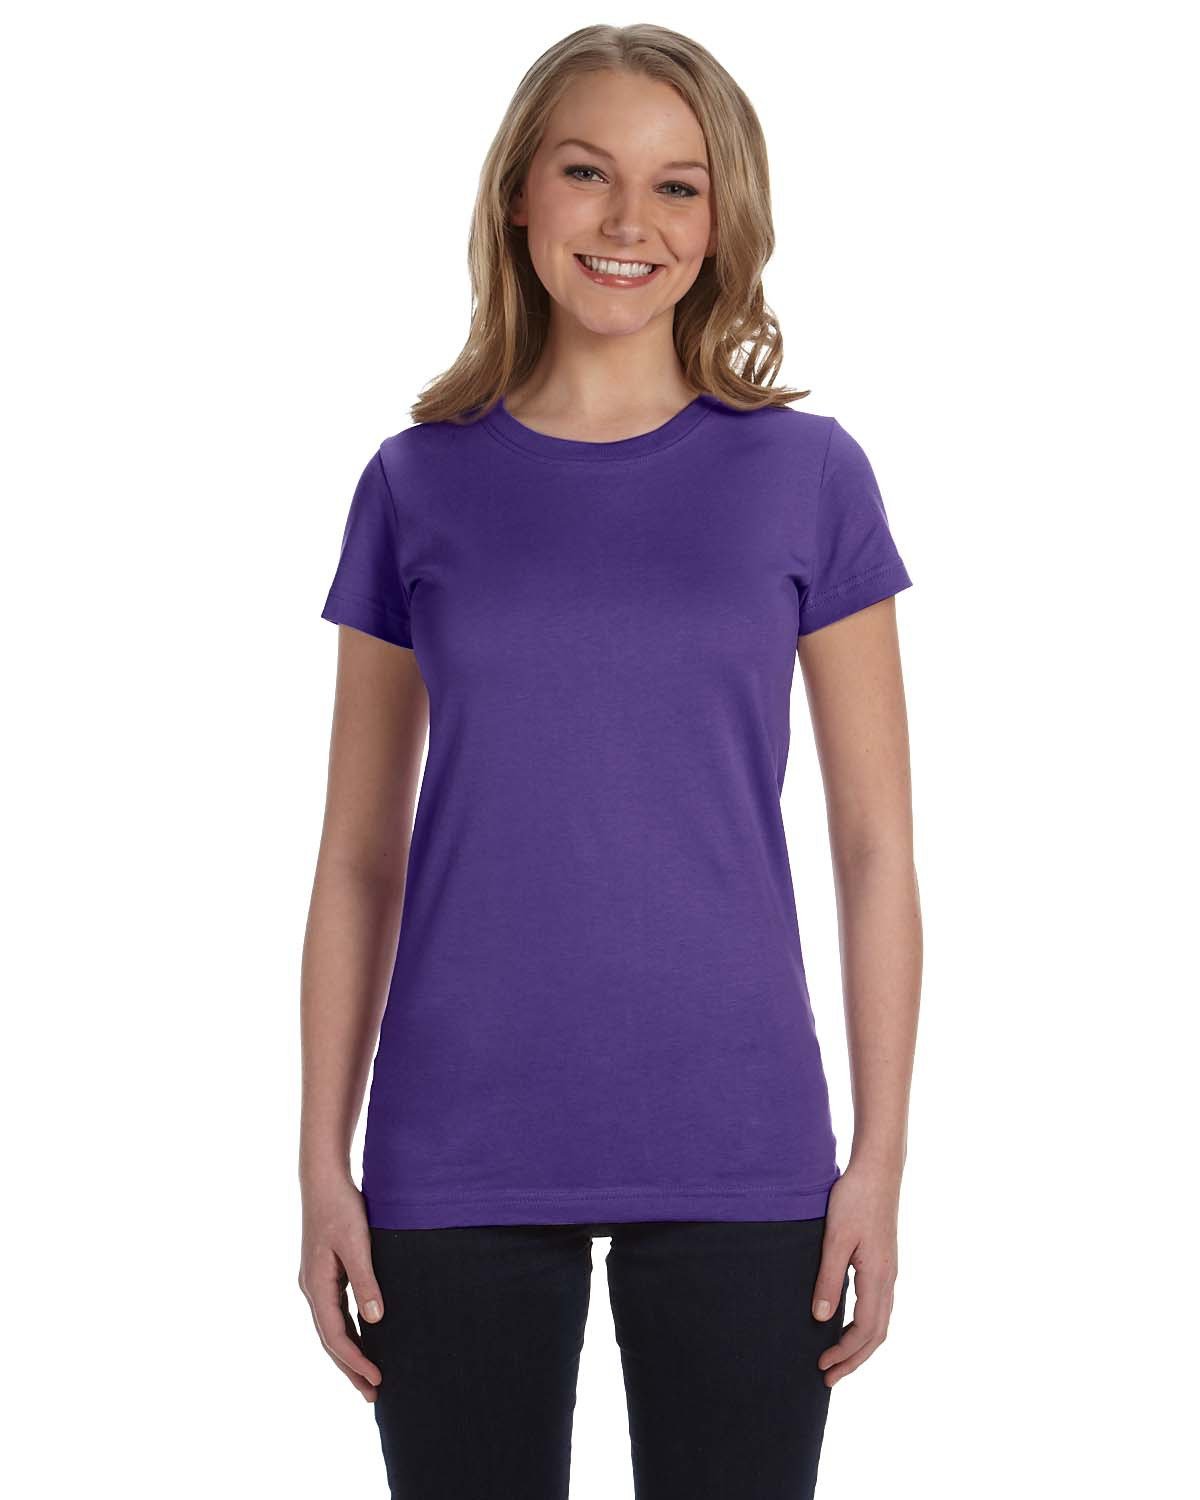 LAT Ladies' Junior Fit T-Shirt purple 